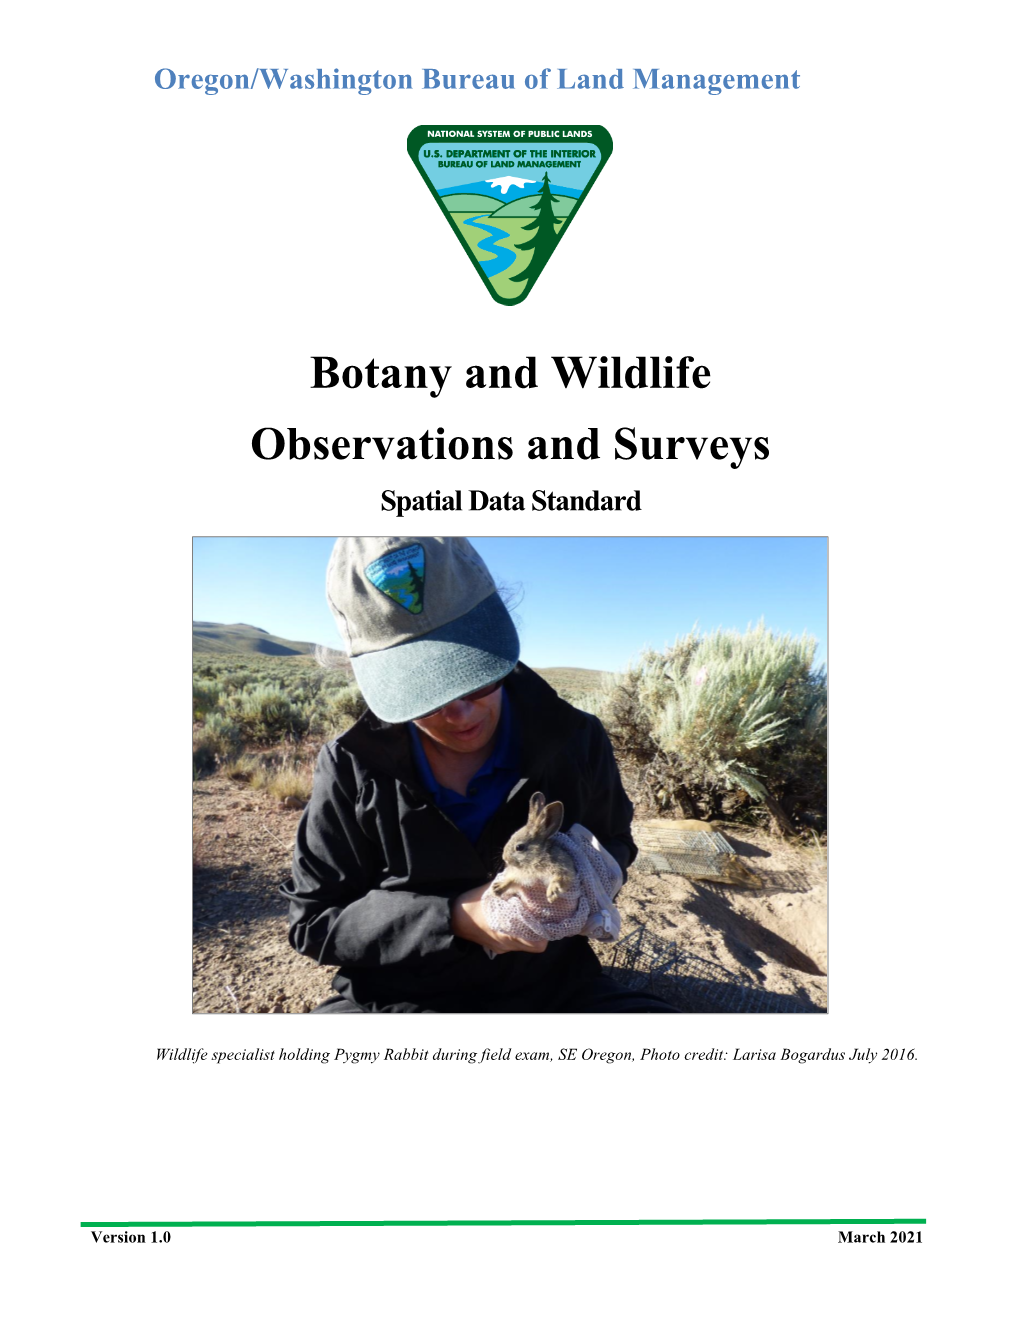 Botany and Wildlife Observations and Surveys Data Standard